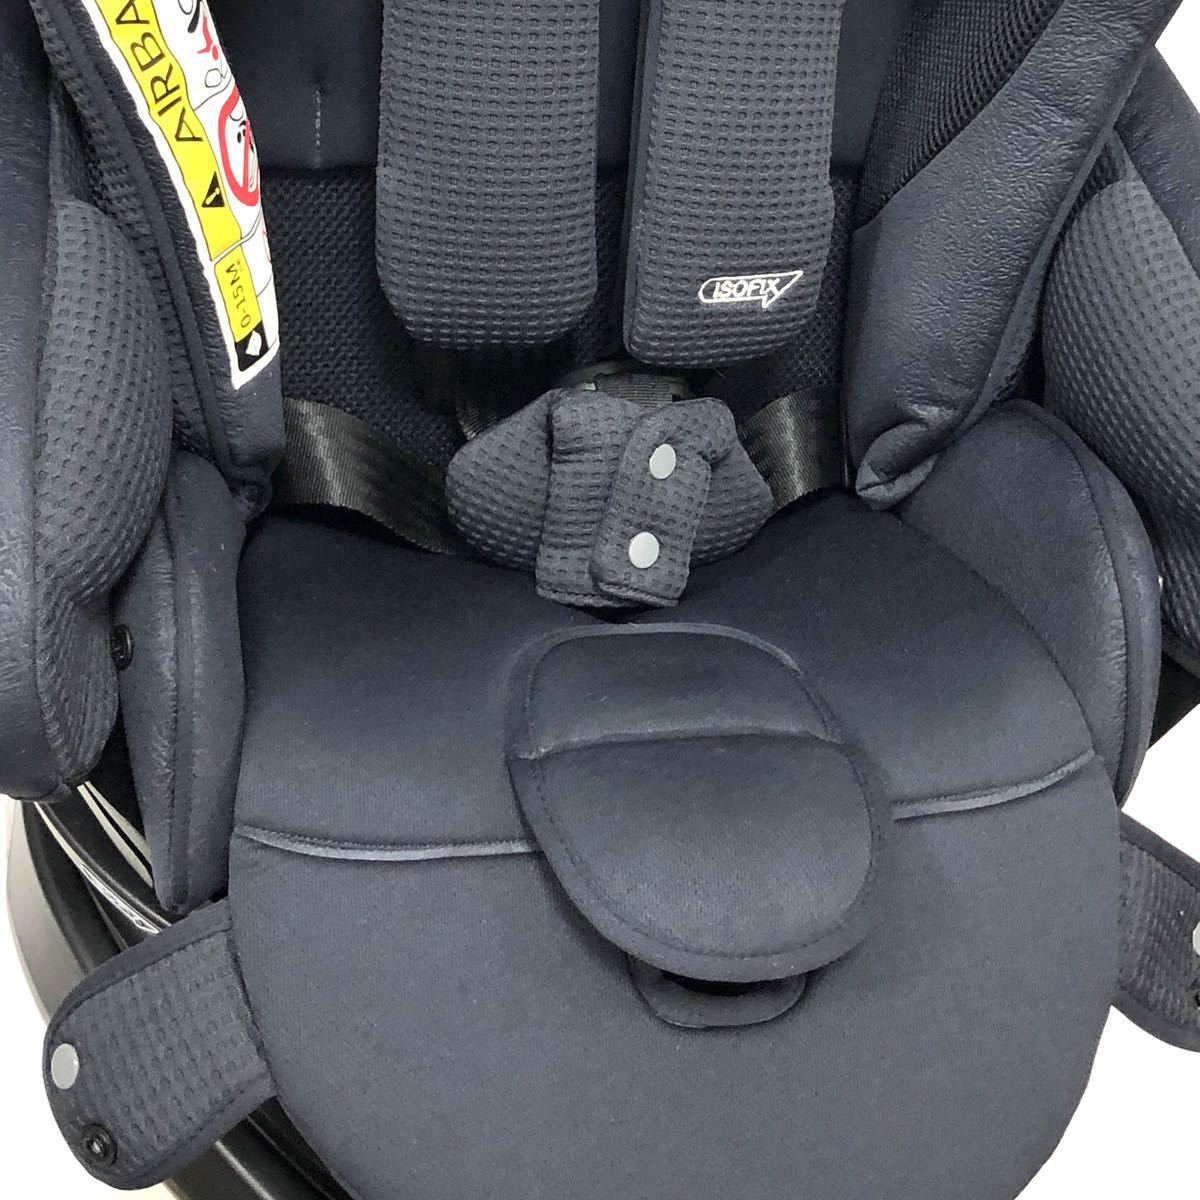 VAprica Furadia Glo uISOFIX safety plus premium 2139044 child seat pad * shade lack of direct receipt OK RC3666